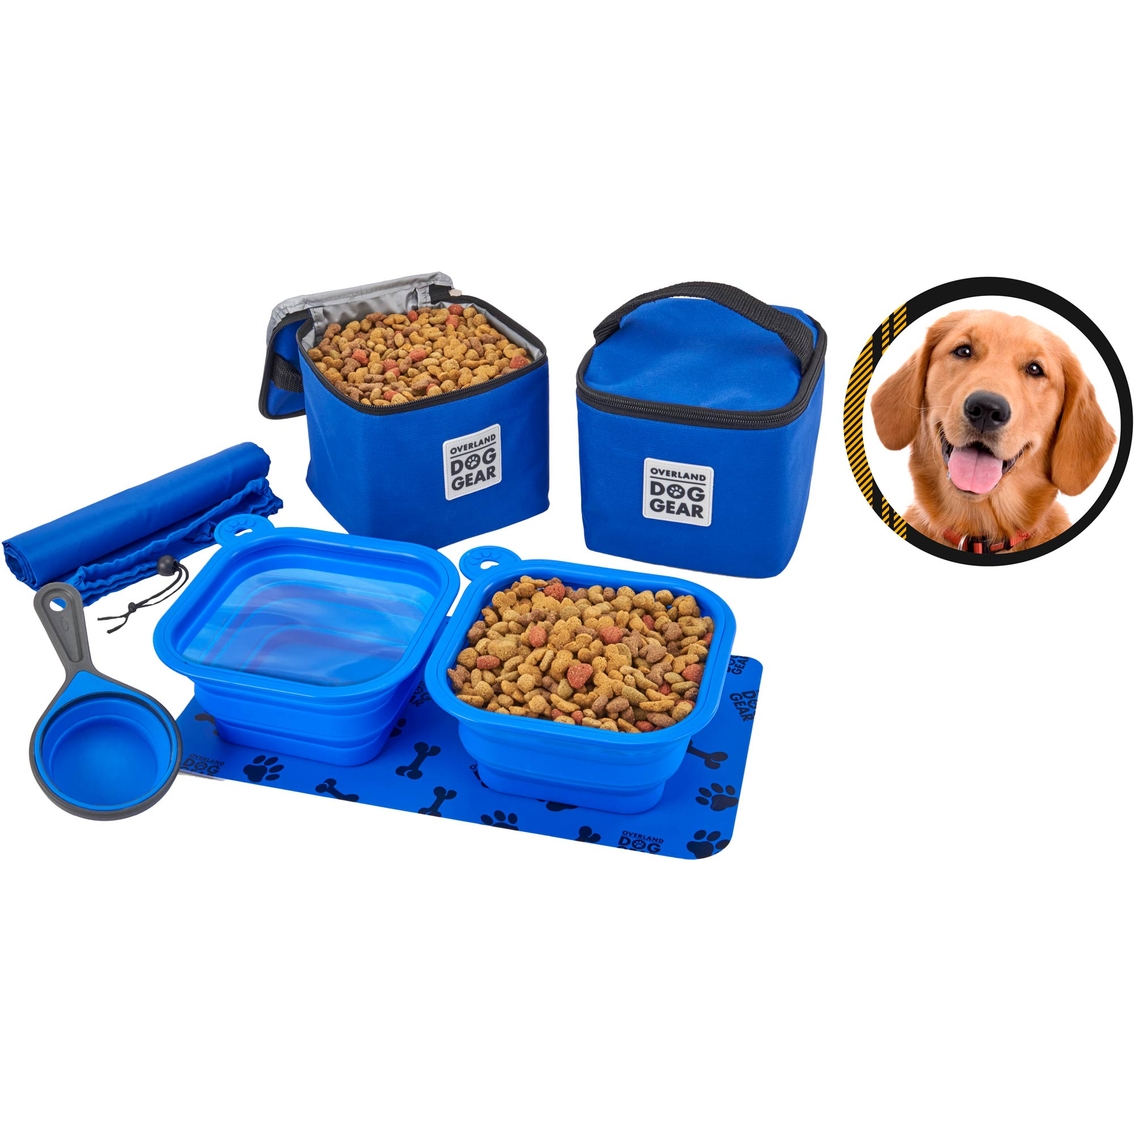 Mobile Dog Gear Dine Away Bag - Image 7 of 7